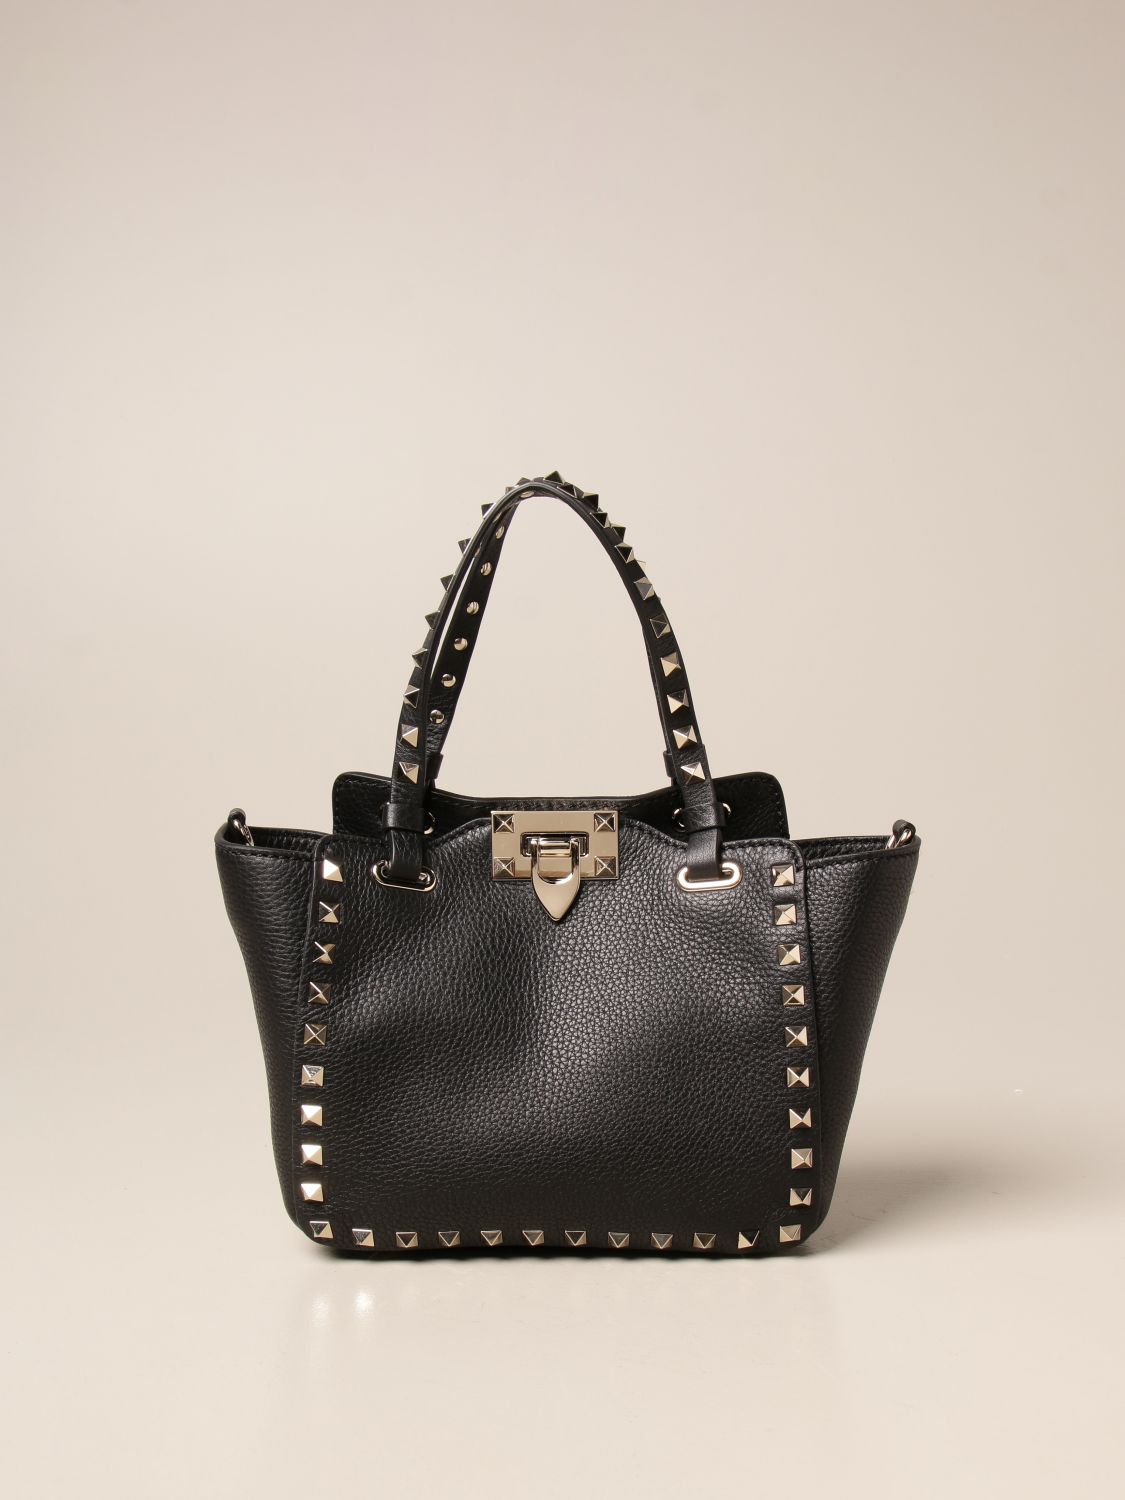 VALENTINO GARAVANI: Rockstud bag in leather with studs - Black  Valentino  Garavani mini bag VW2B0861 VSF online at